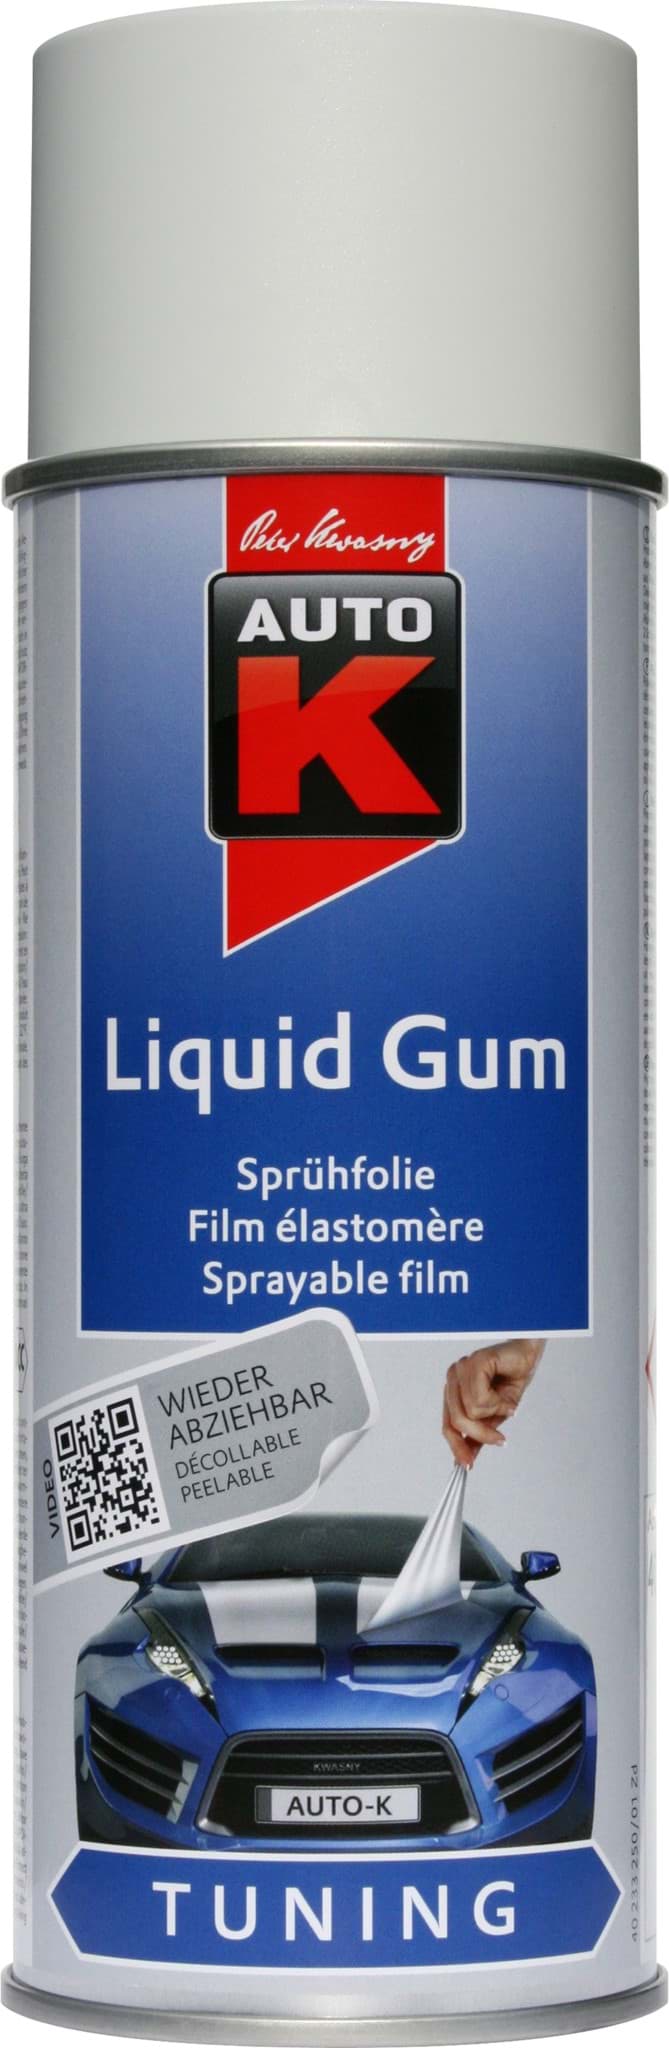 Afbeelding van AutoK Liquid Gum Sprühfolie weiss matt 400ml Folienlack, Abziehlack, Felgenfolie, 233251